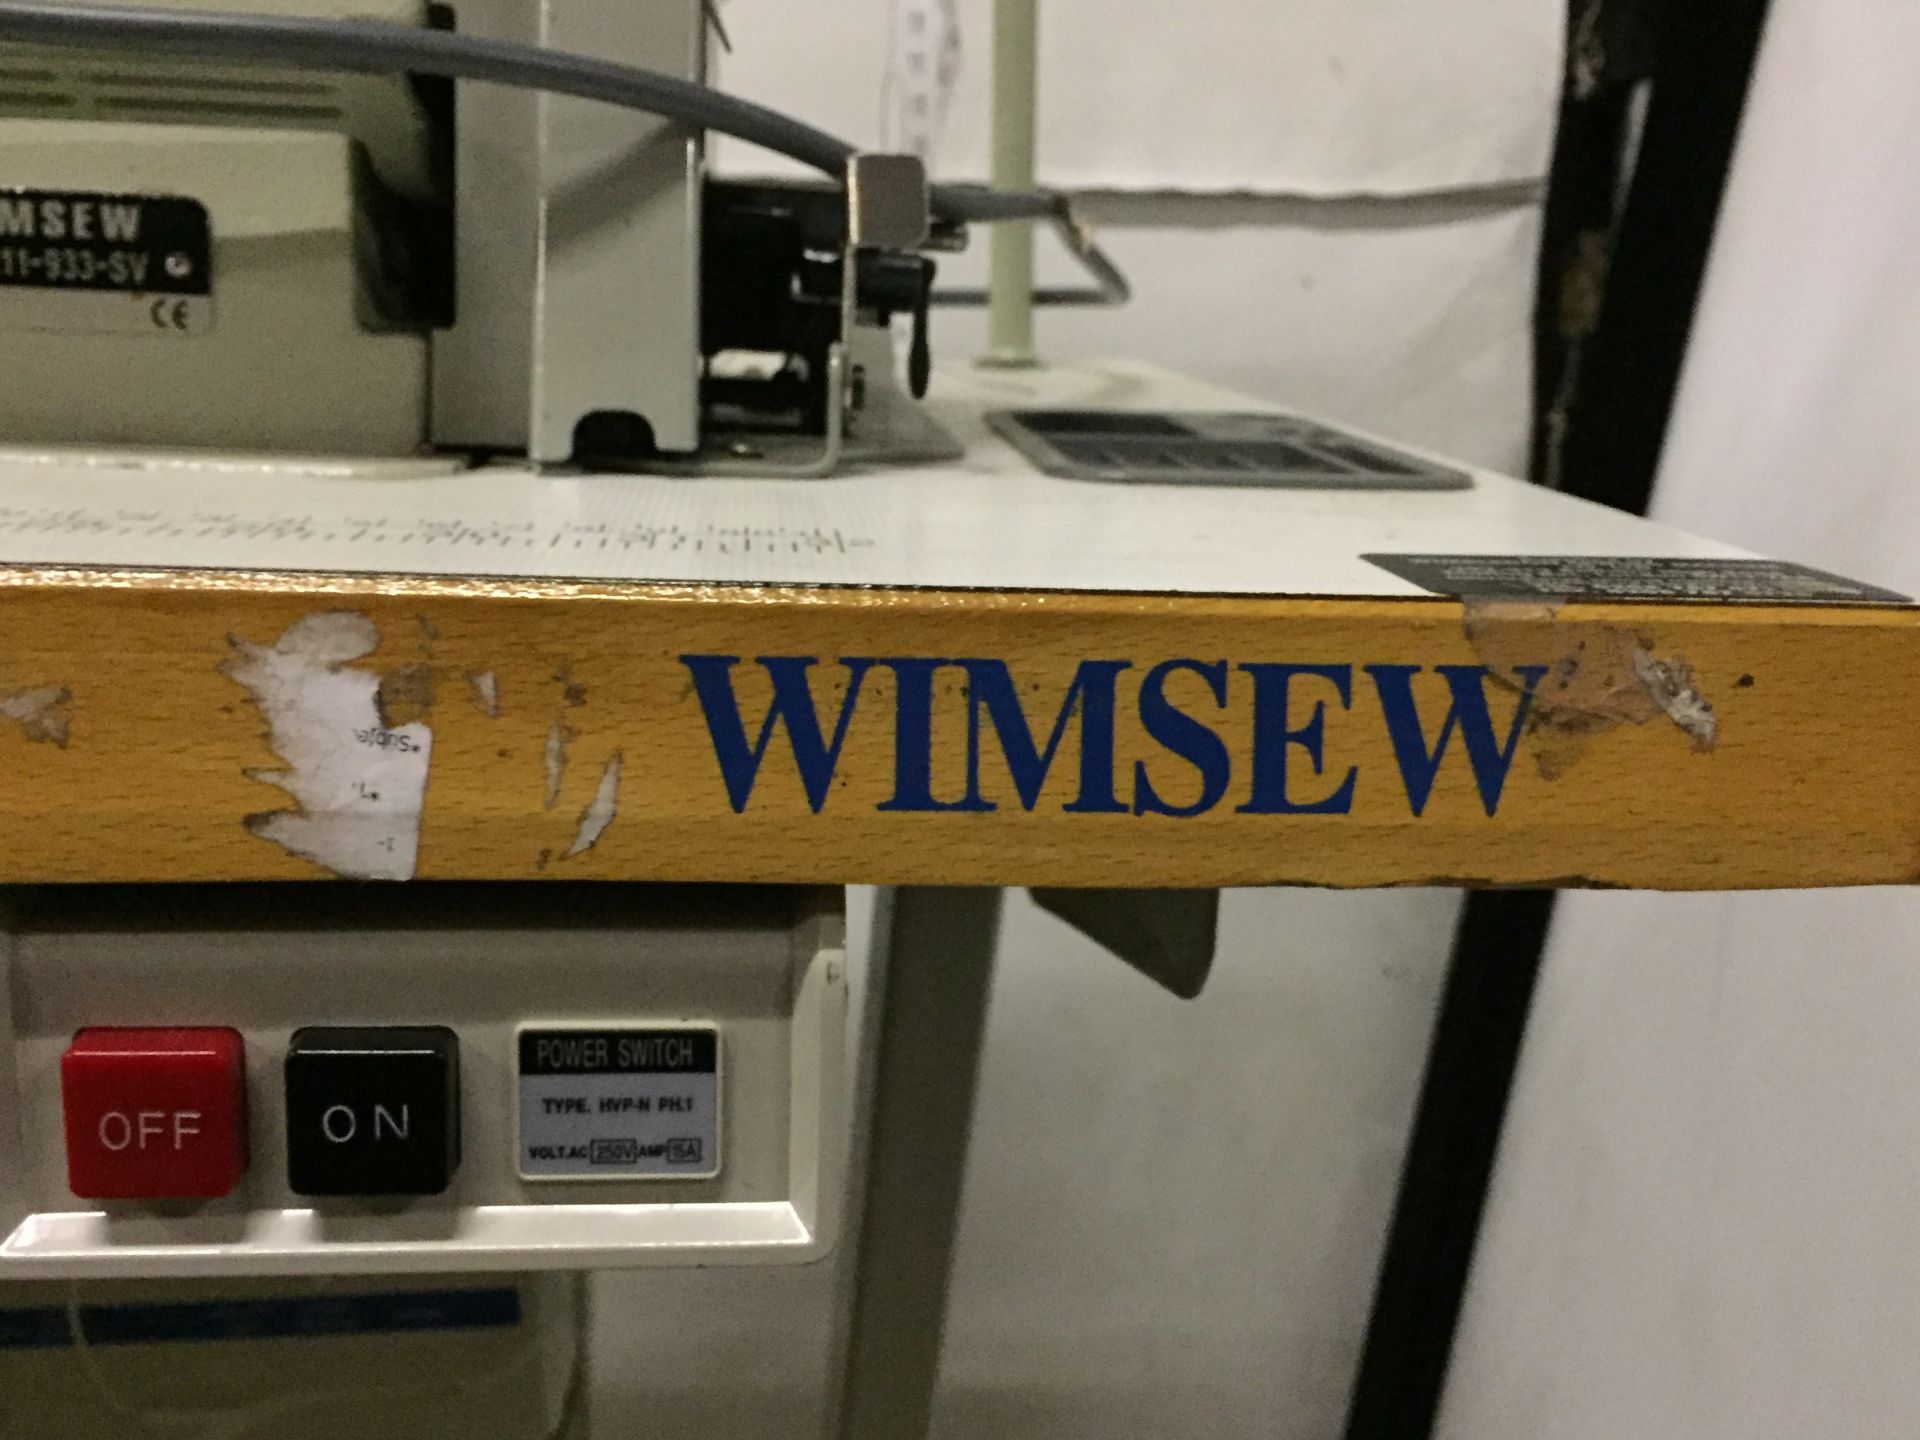 Winsew sewing machine Model W-B-211-933-SV S/n 090 - Image 4 of 4